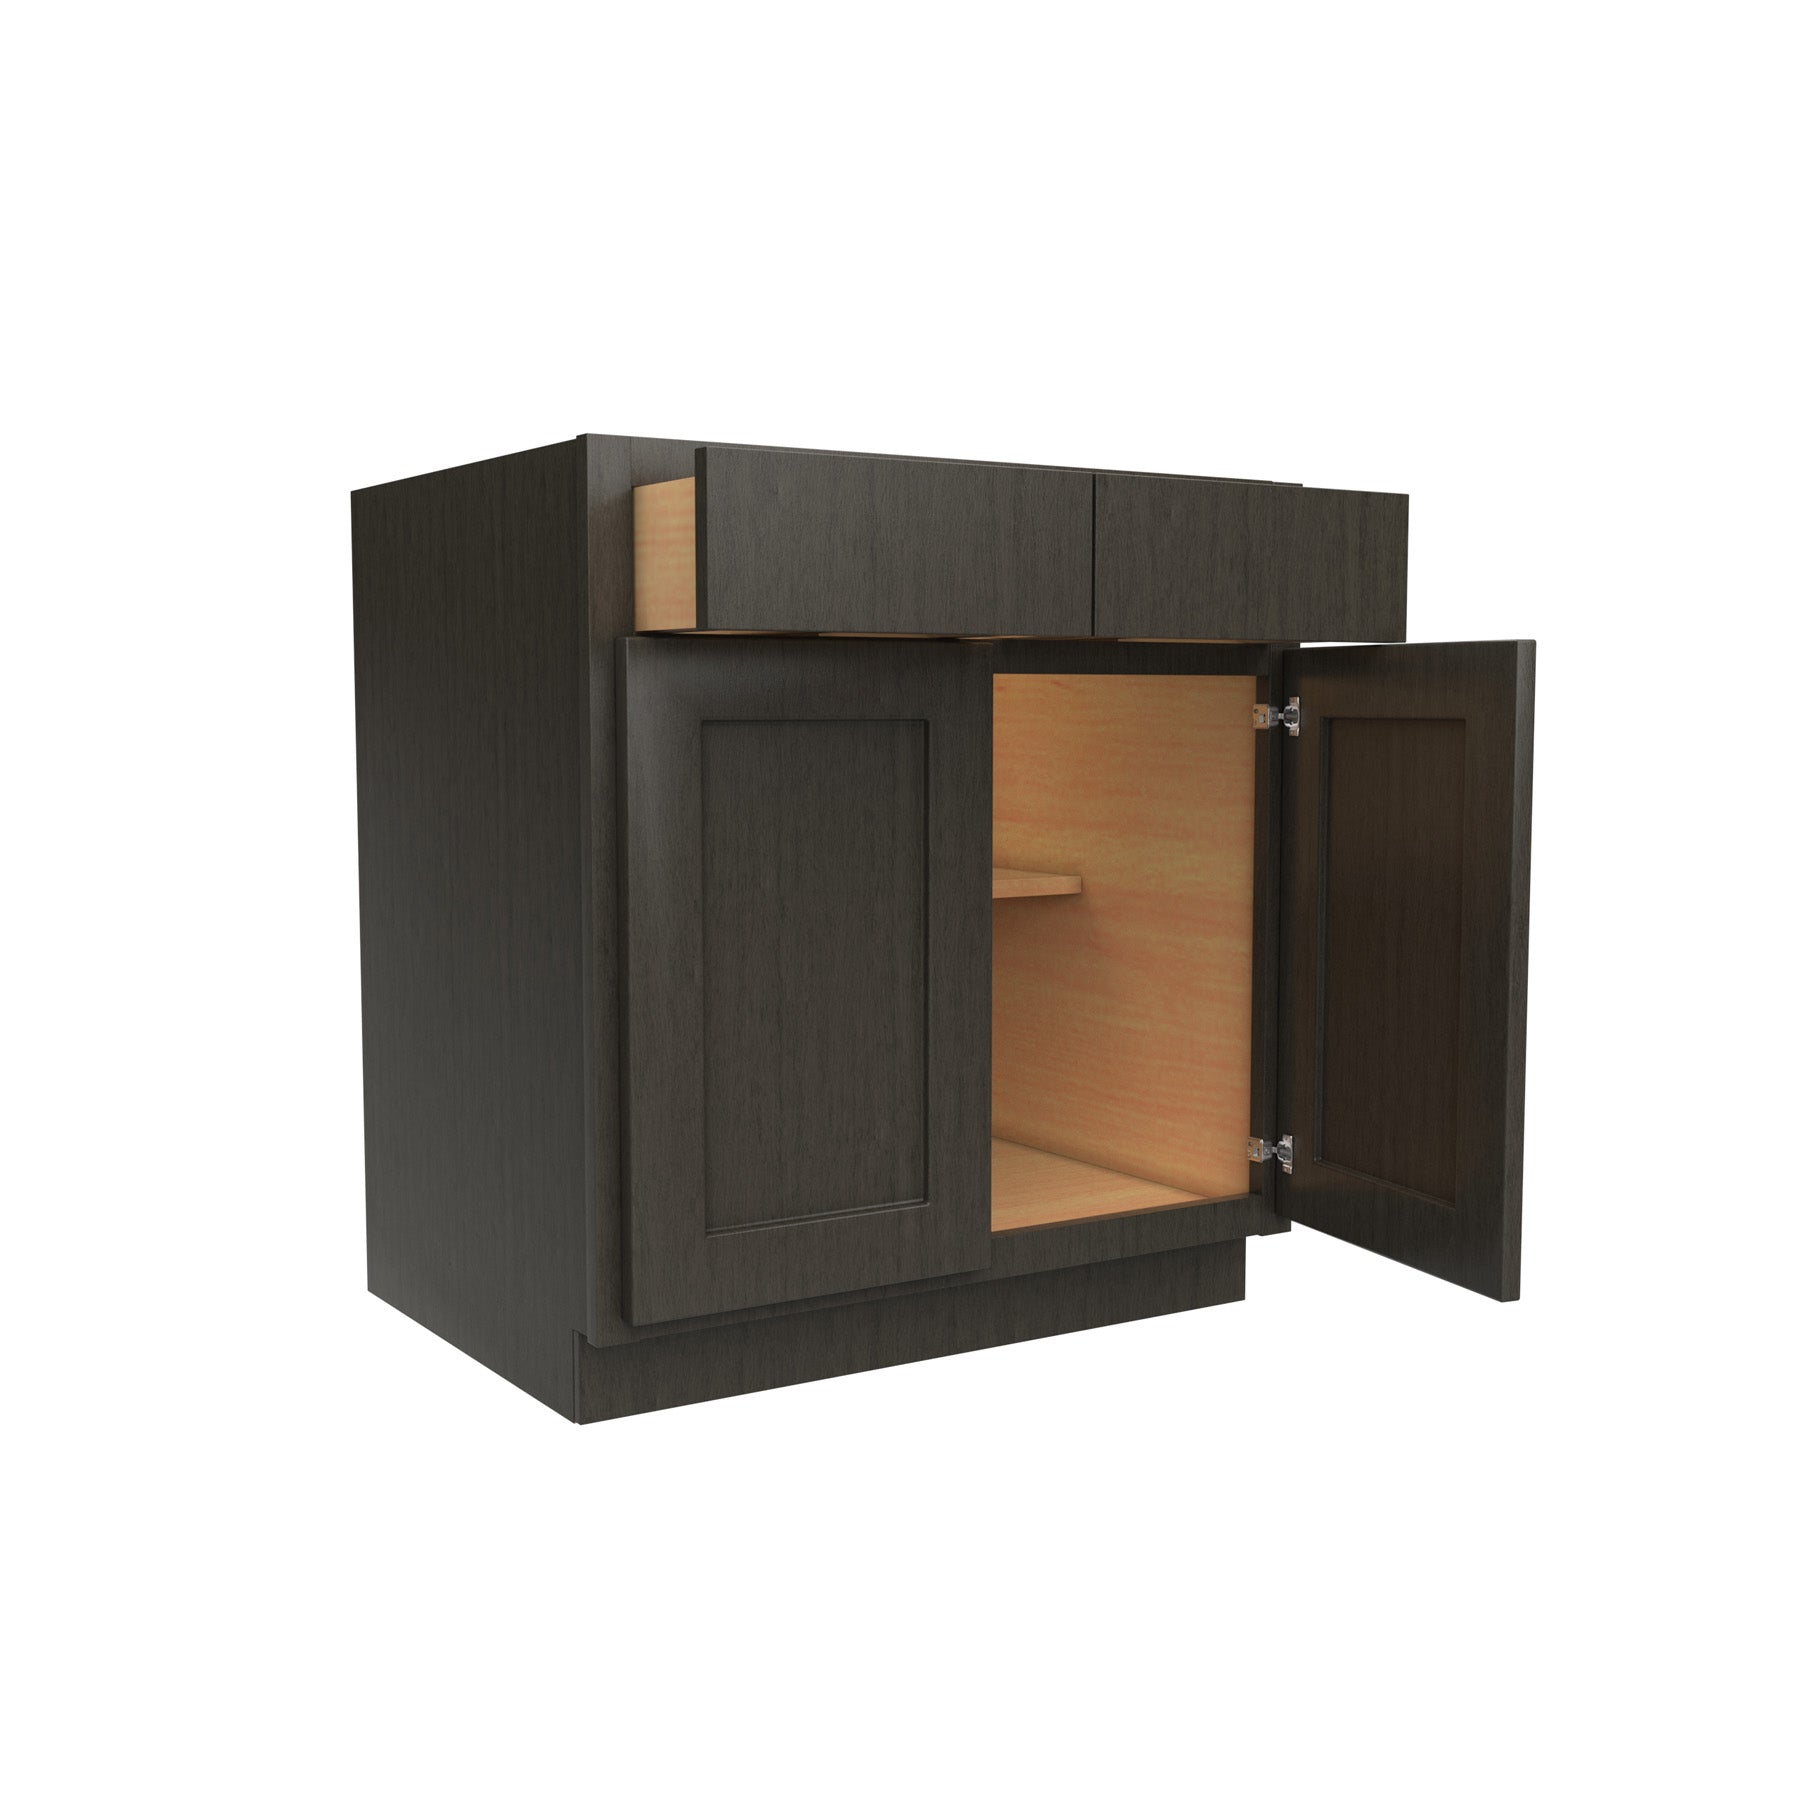 RTA Luxor Smoky Grey - Double Door Base Cabinet | 30"W x 34.5"H x 24"D